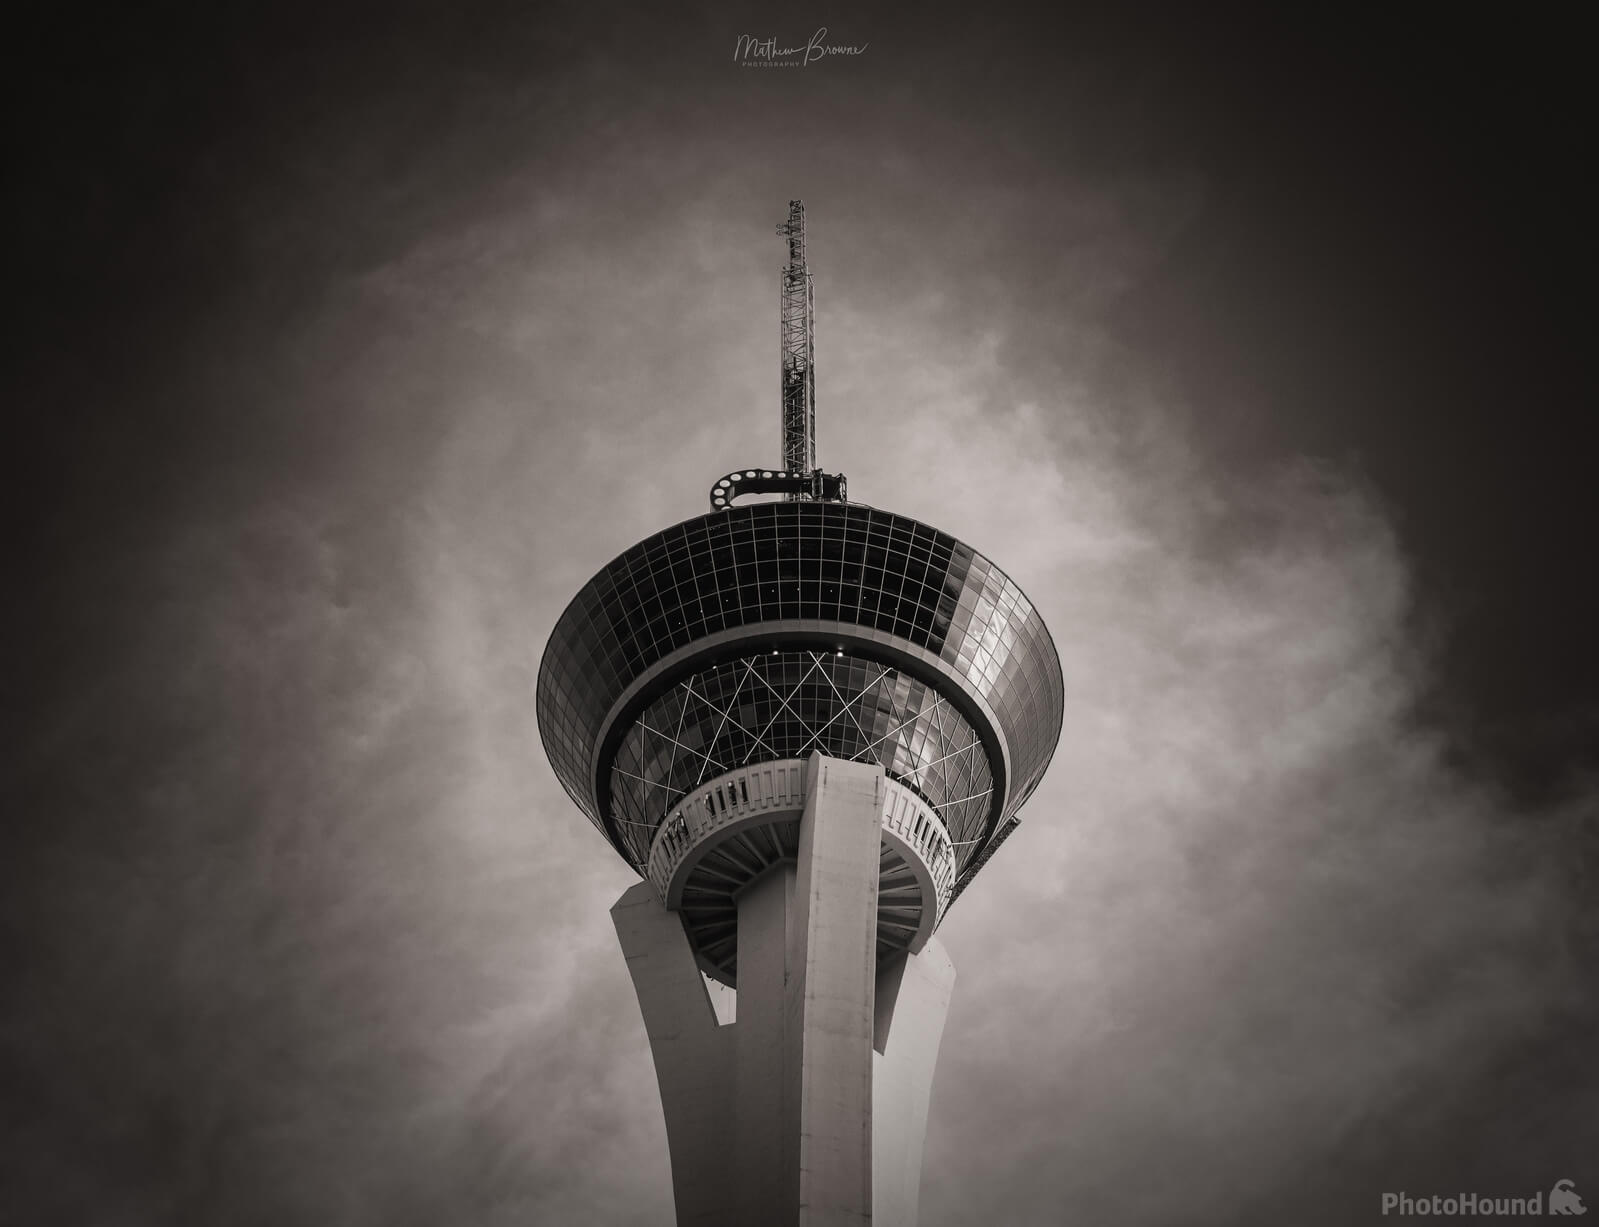 Image of Stratosphere Las Vegas by Mathew Browne